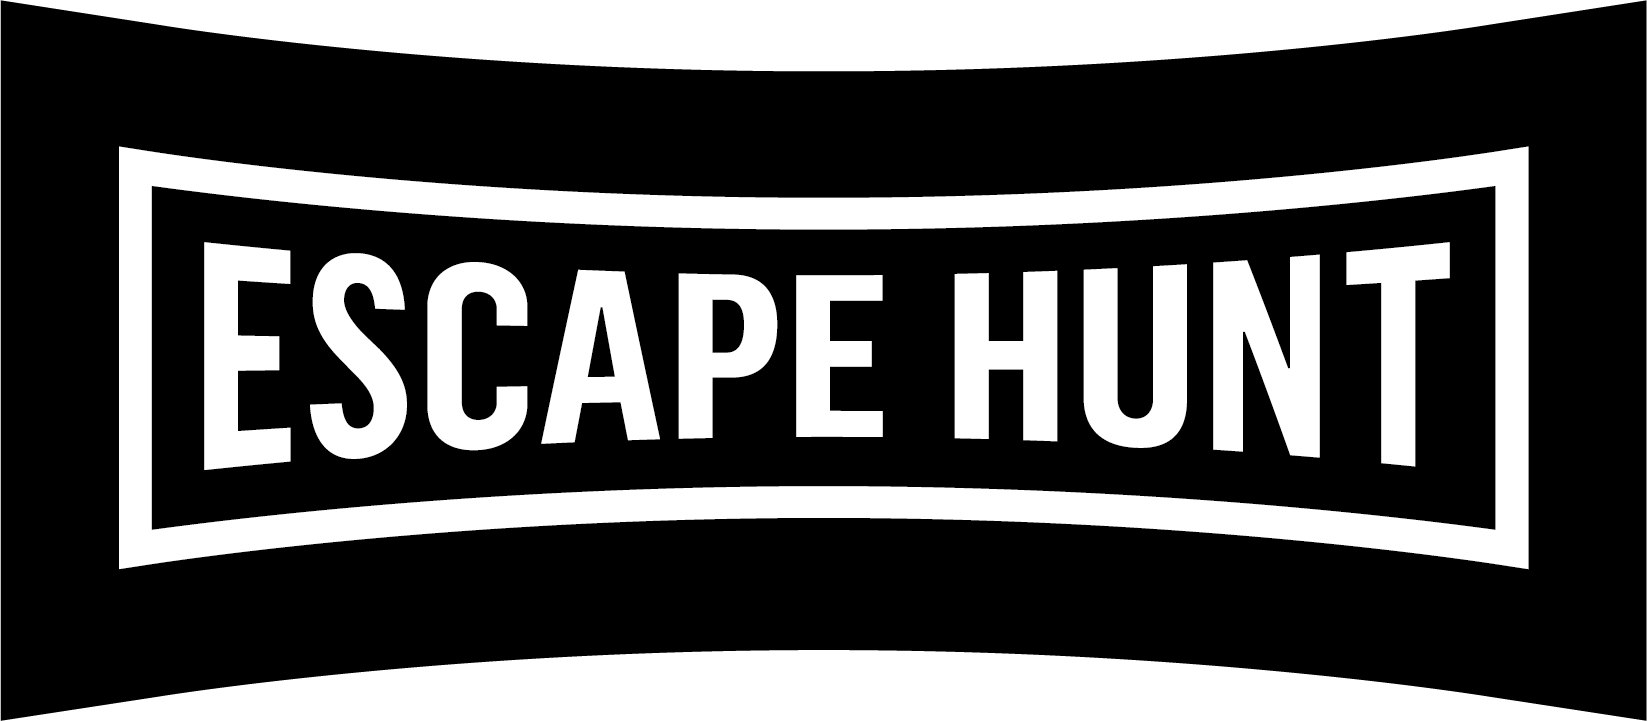 Escape Hunt: Escape Room Experiences | Escape Room Games